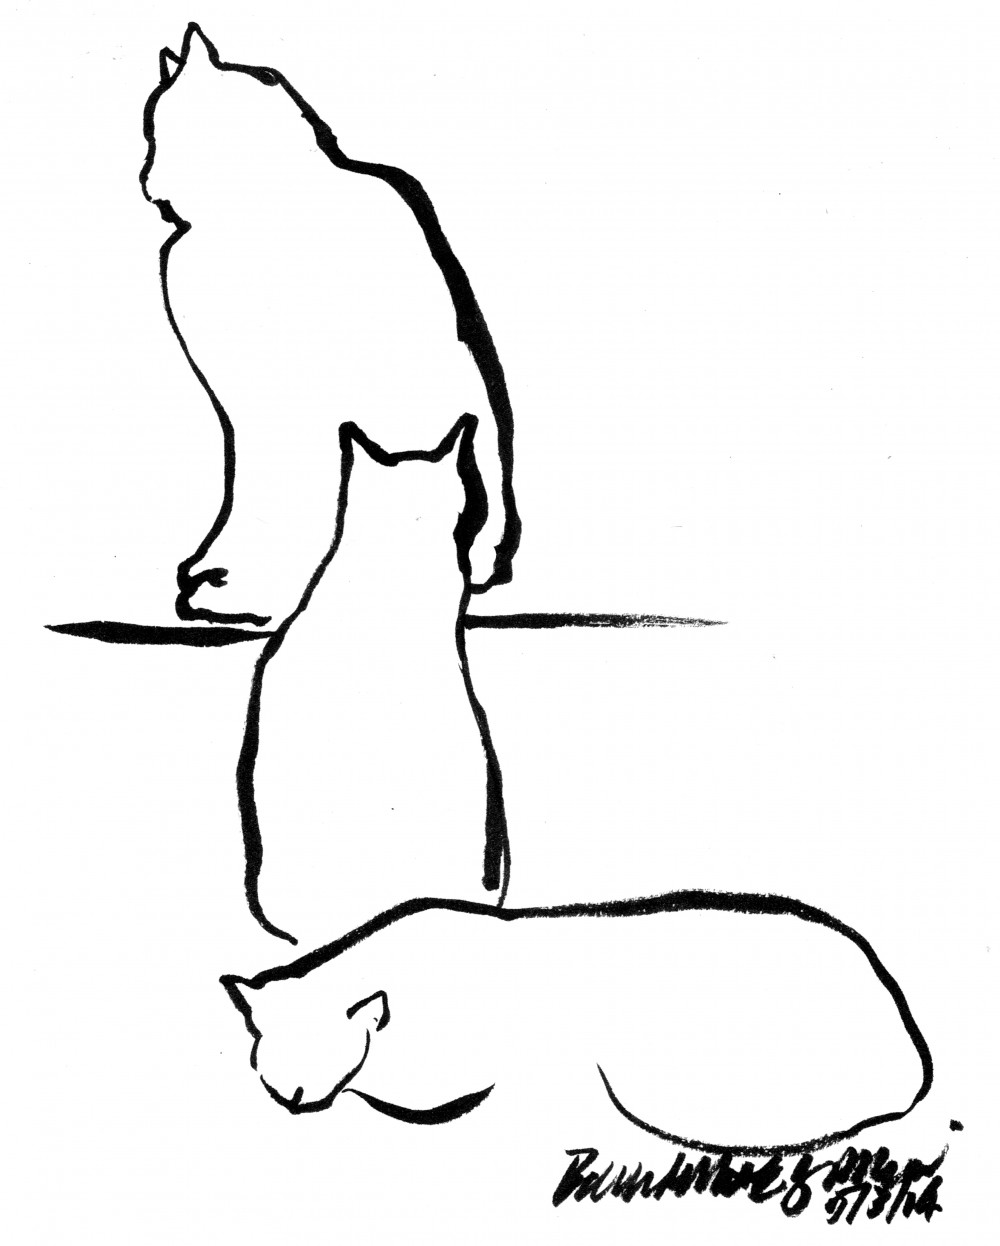 brush pen sketch of three cats